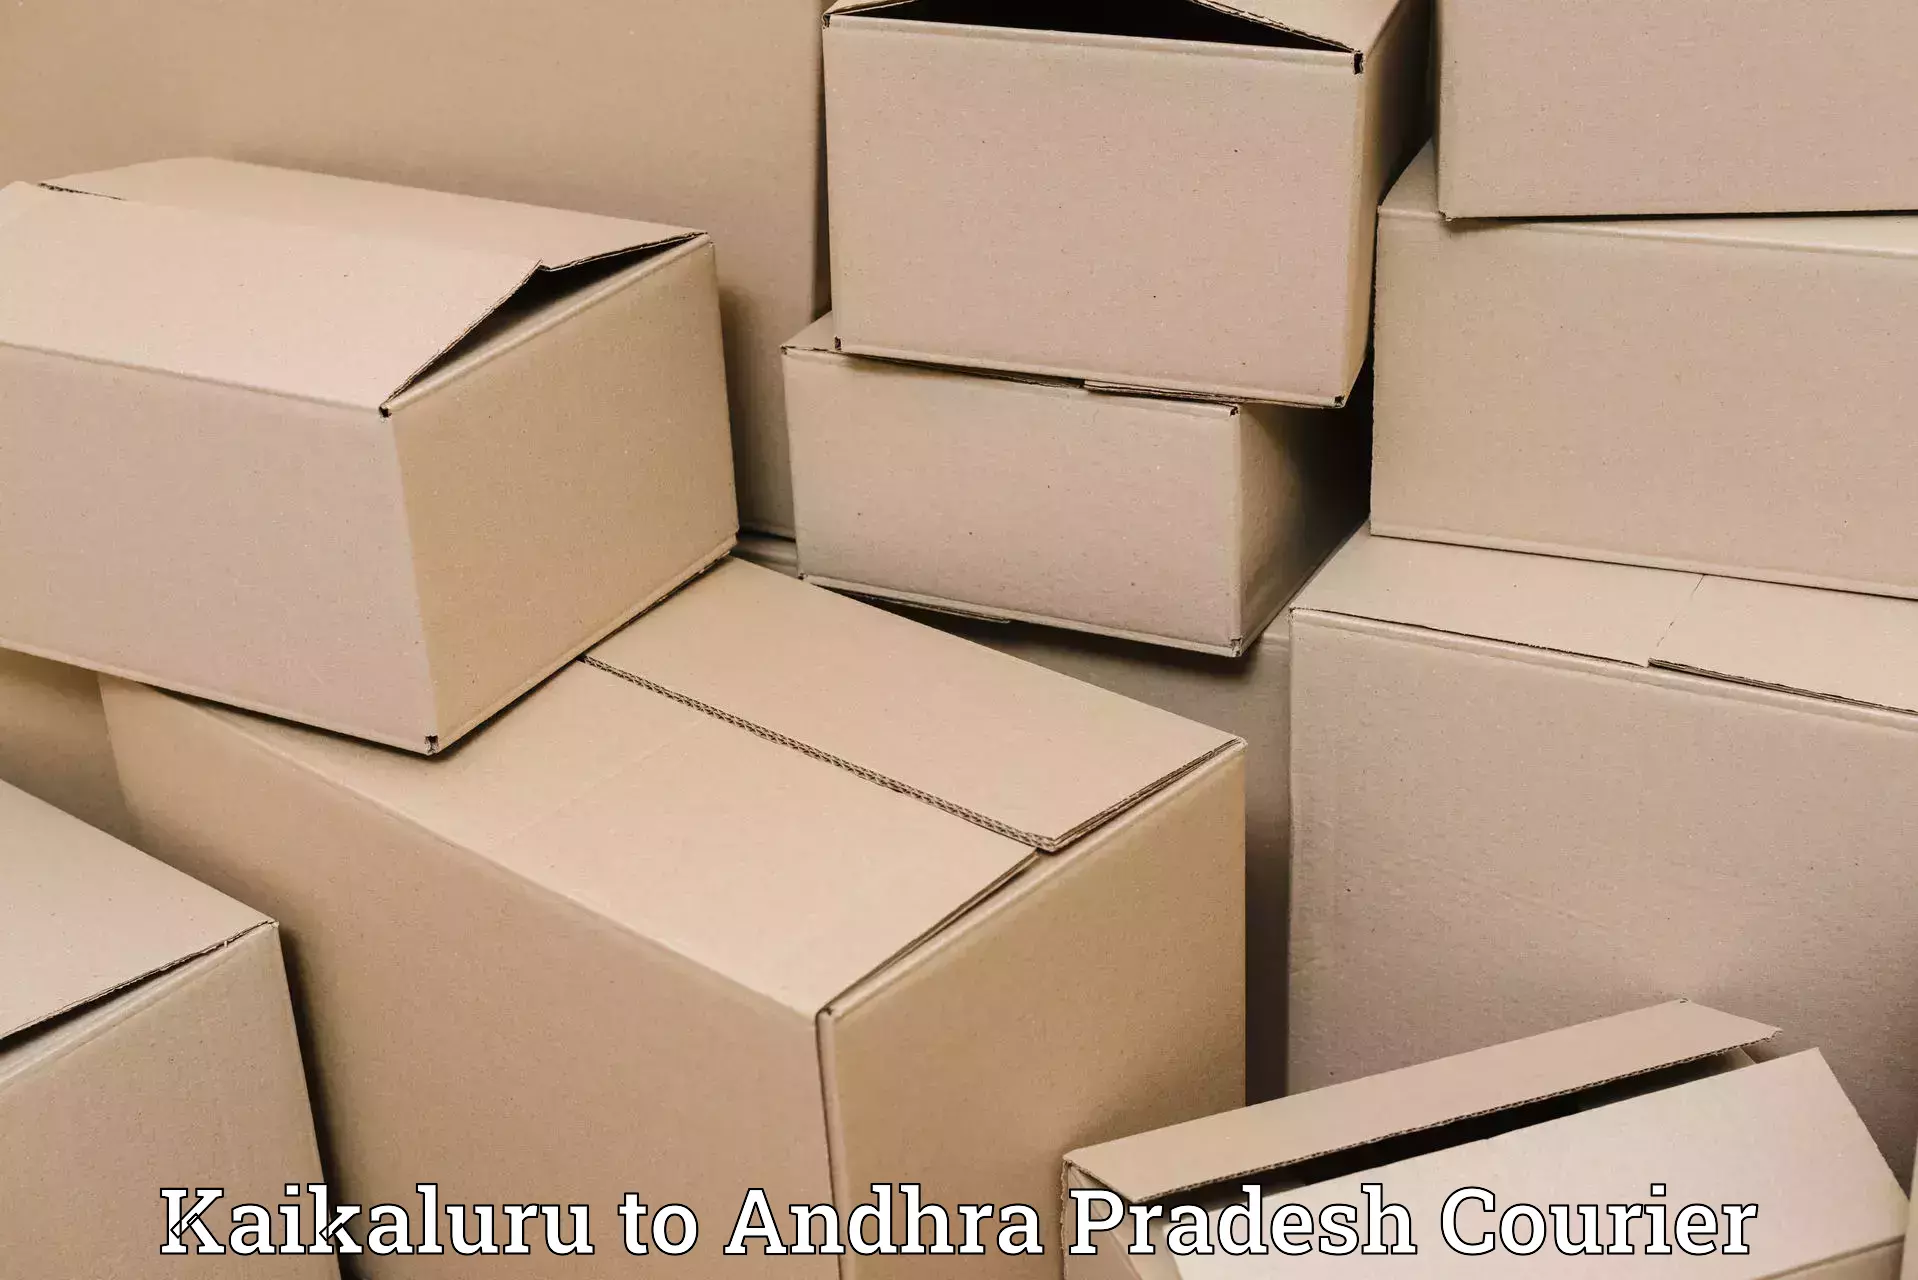 Flexible delivery schedules Kaikaluru to Pedanandipadu